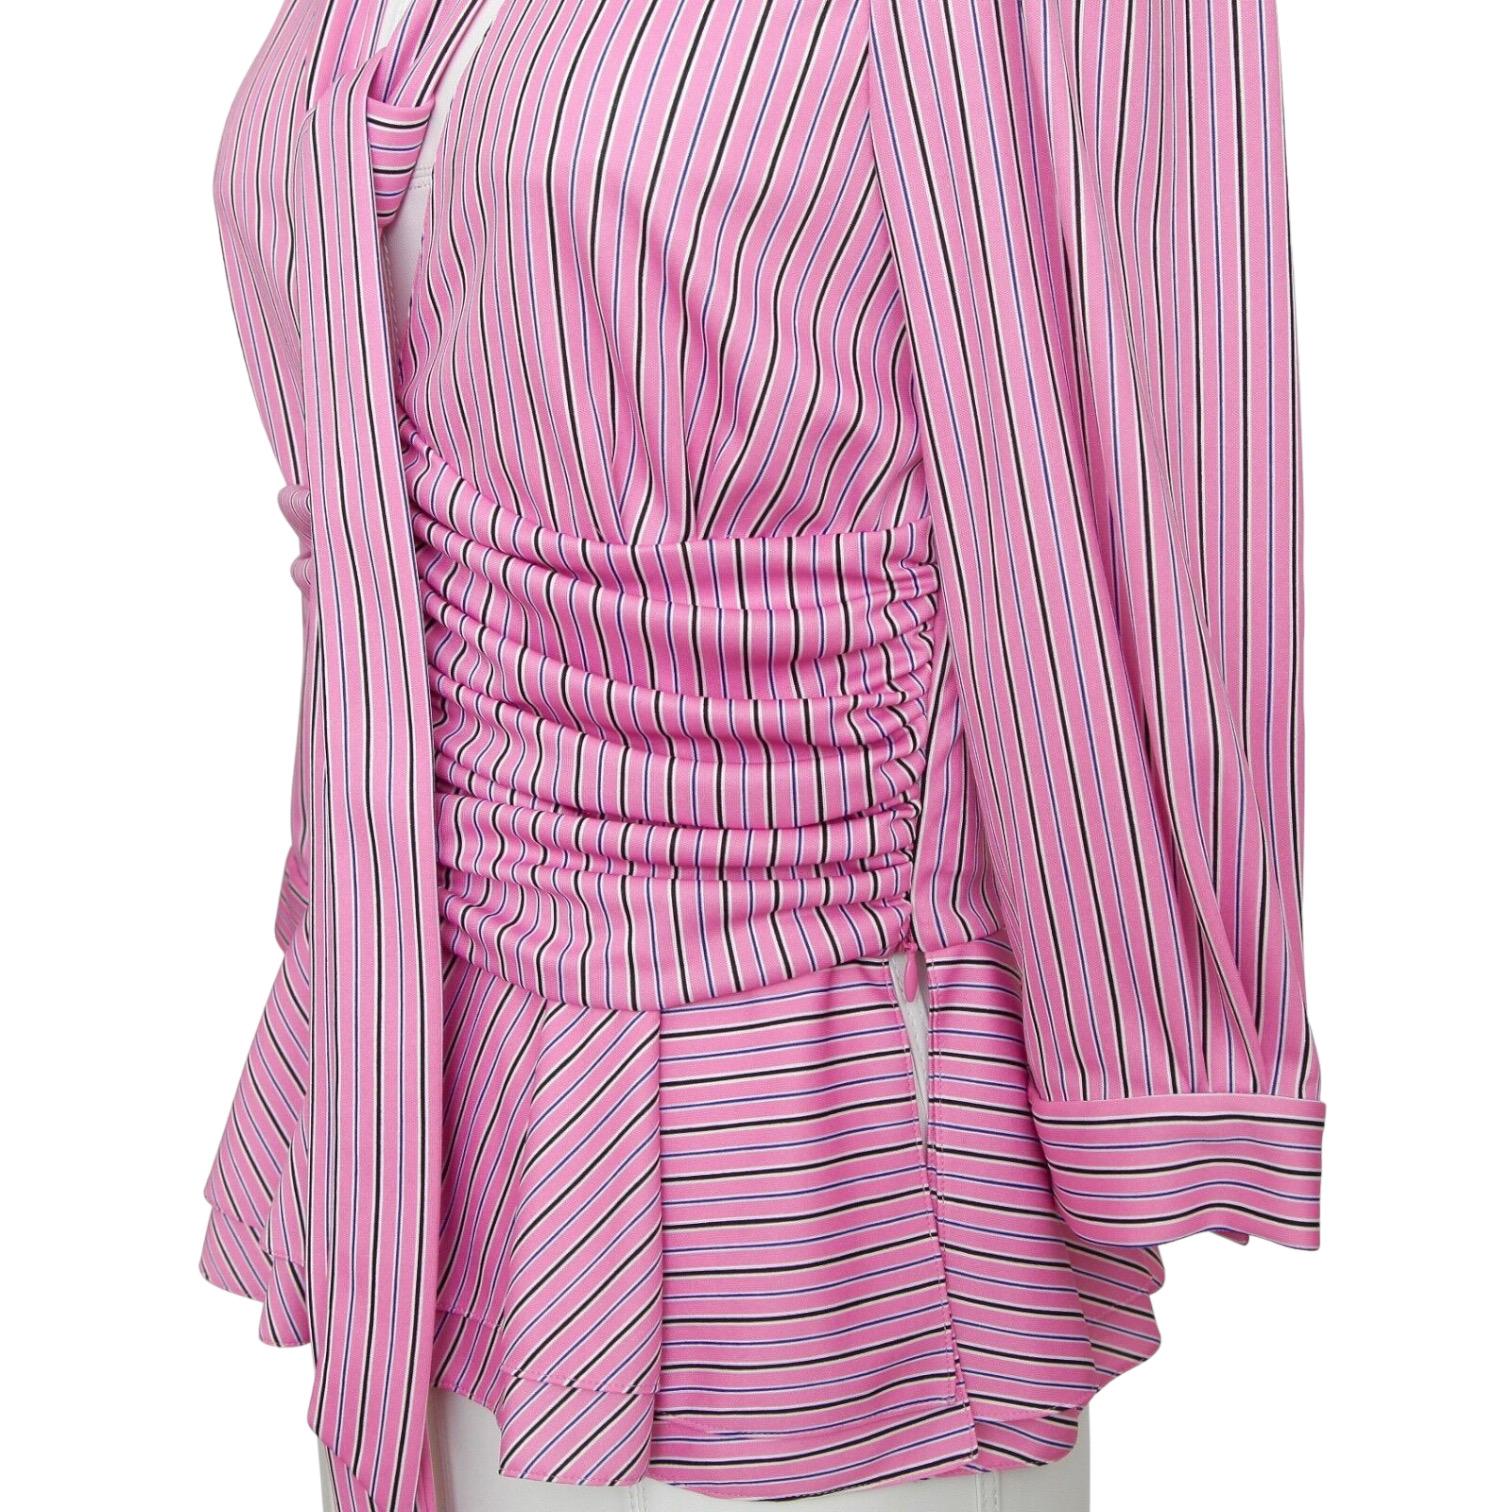 BALENCIAGA Striped Top Shirt Blouse 3/4 Sleeve Neck Tie Rose White Black 38 NWT For Sale 2